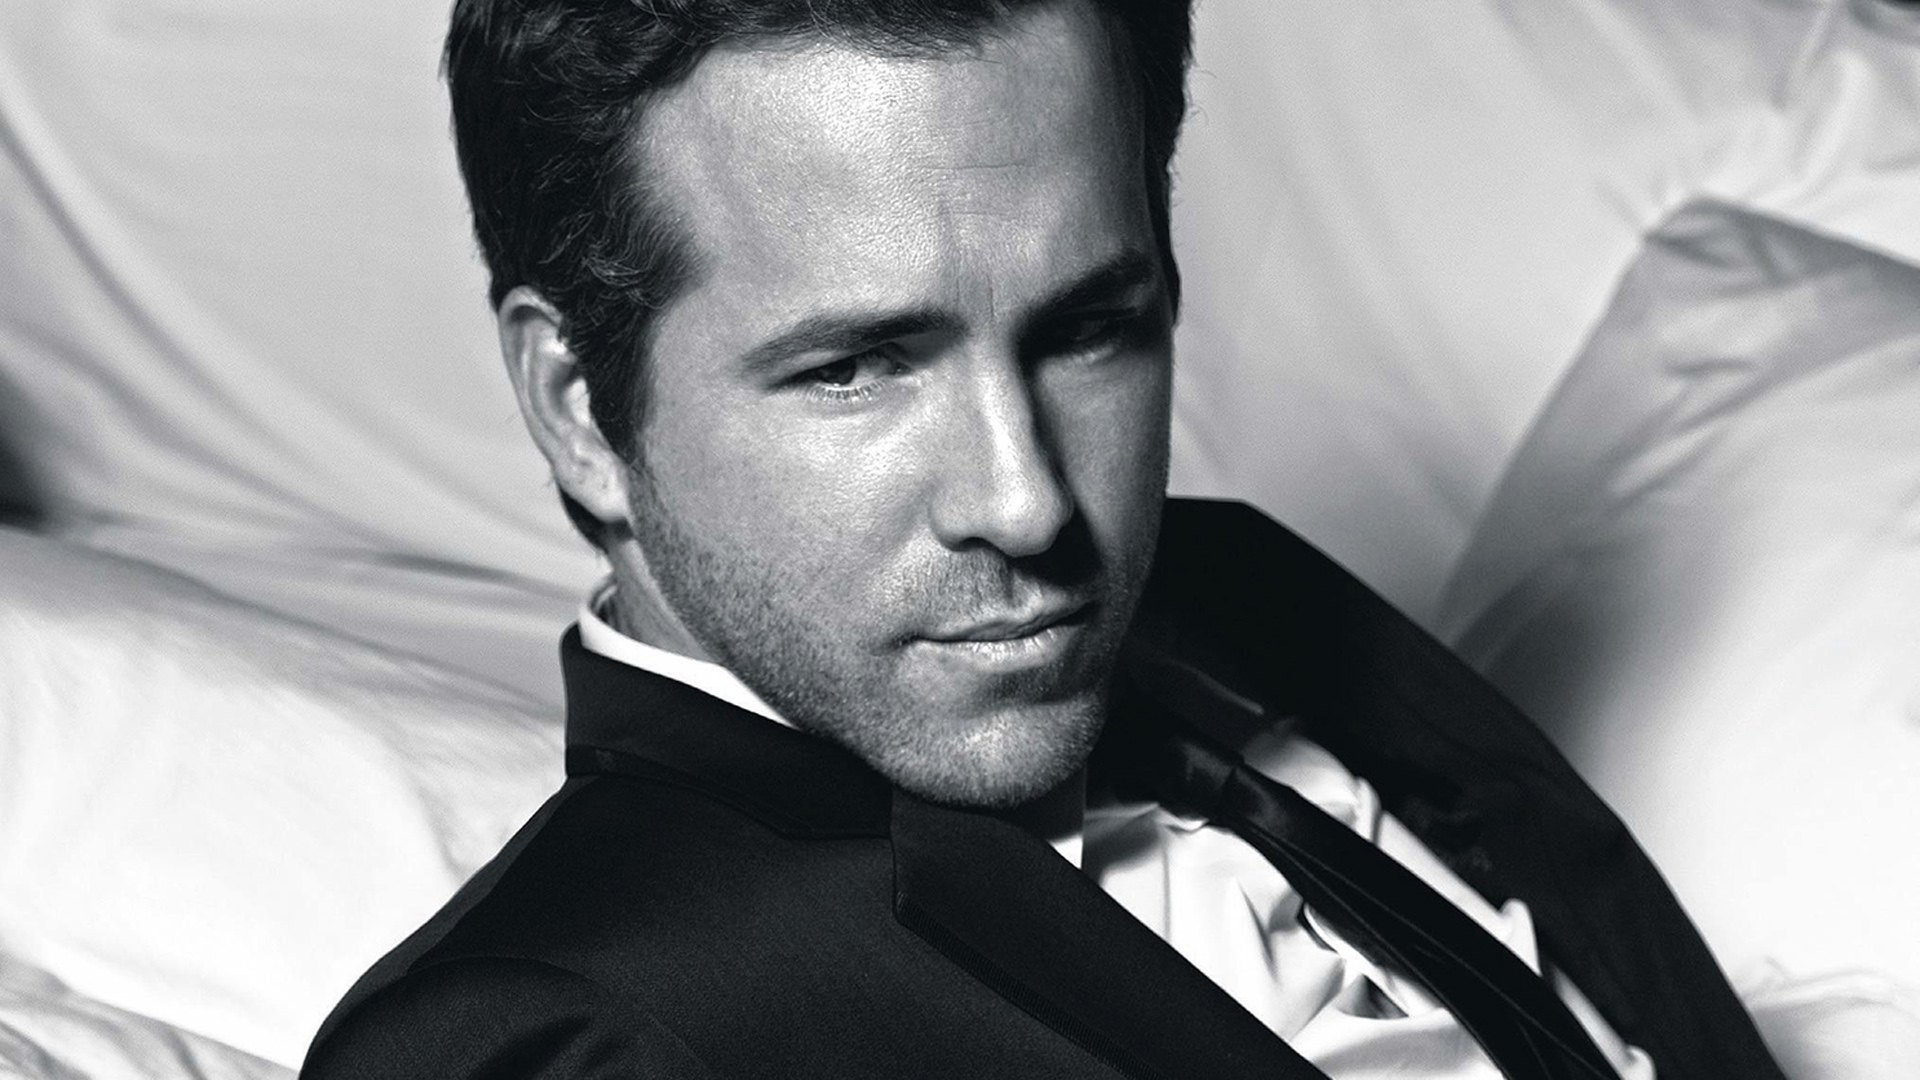 Ryan Reynolds Portrait Wallpapers